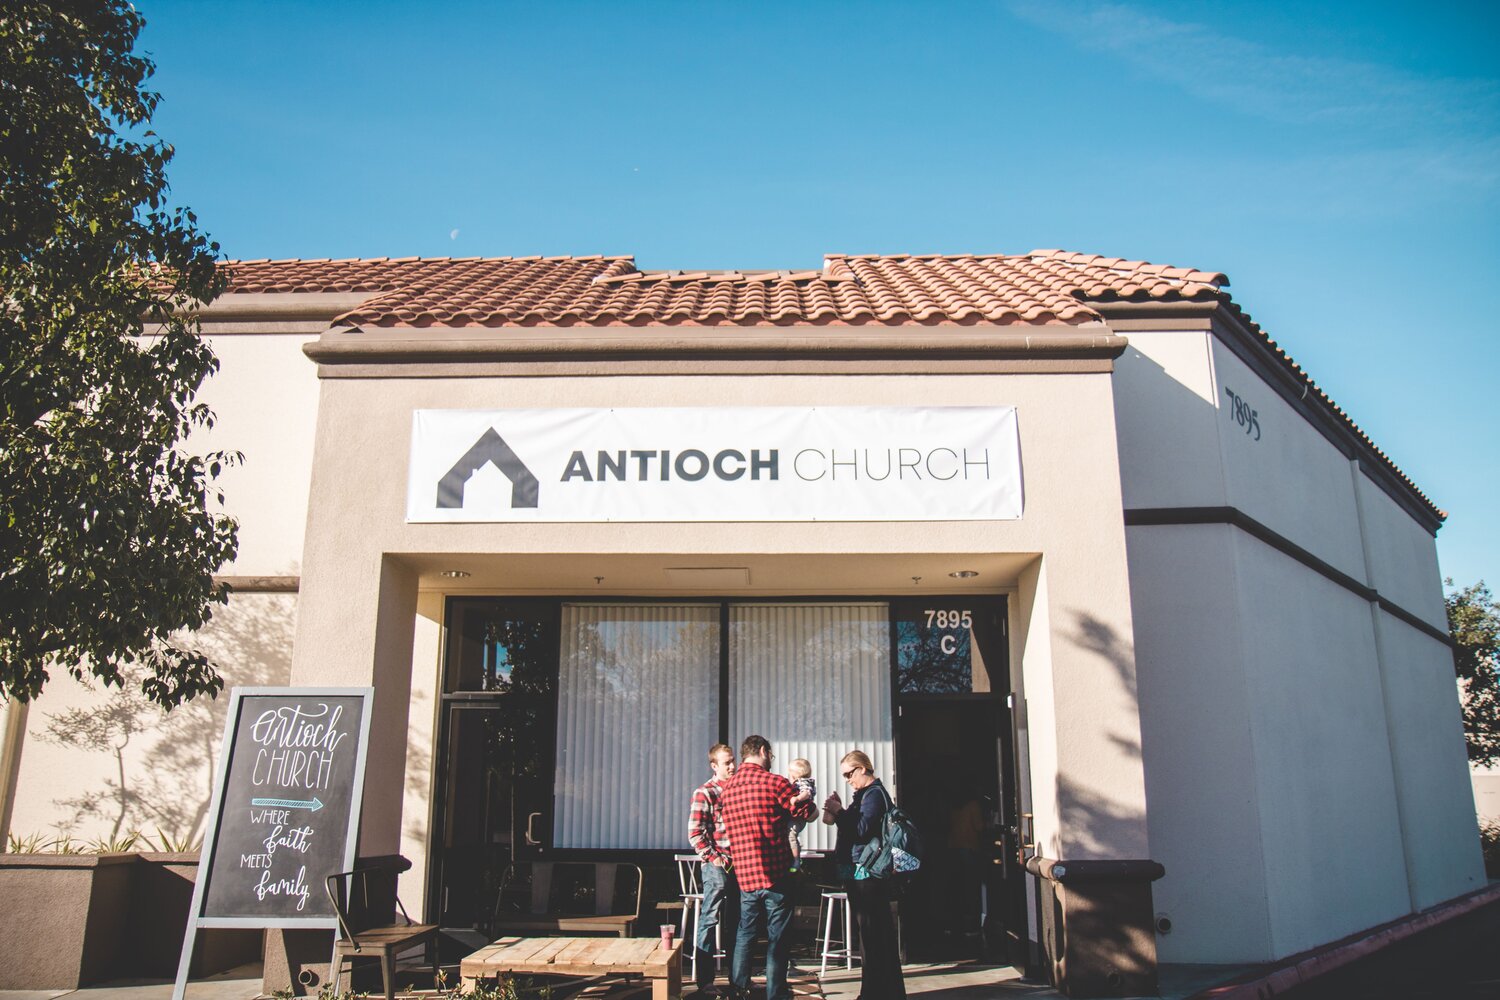 The Antioch Merch Store